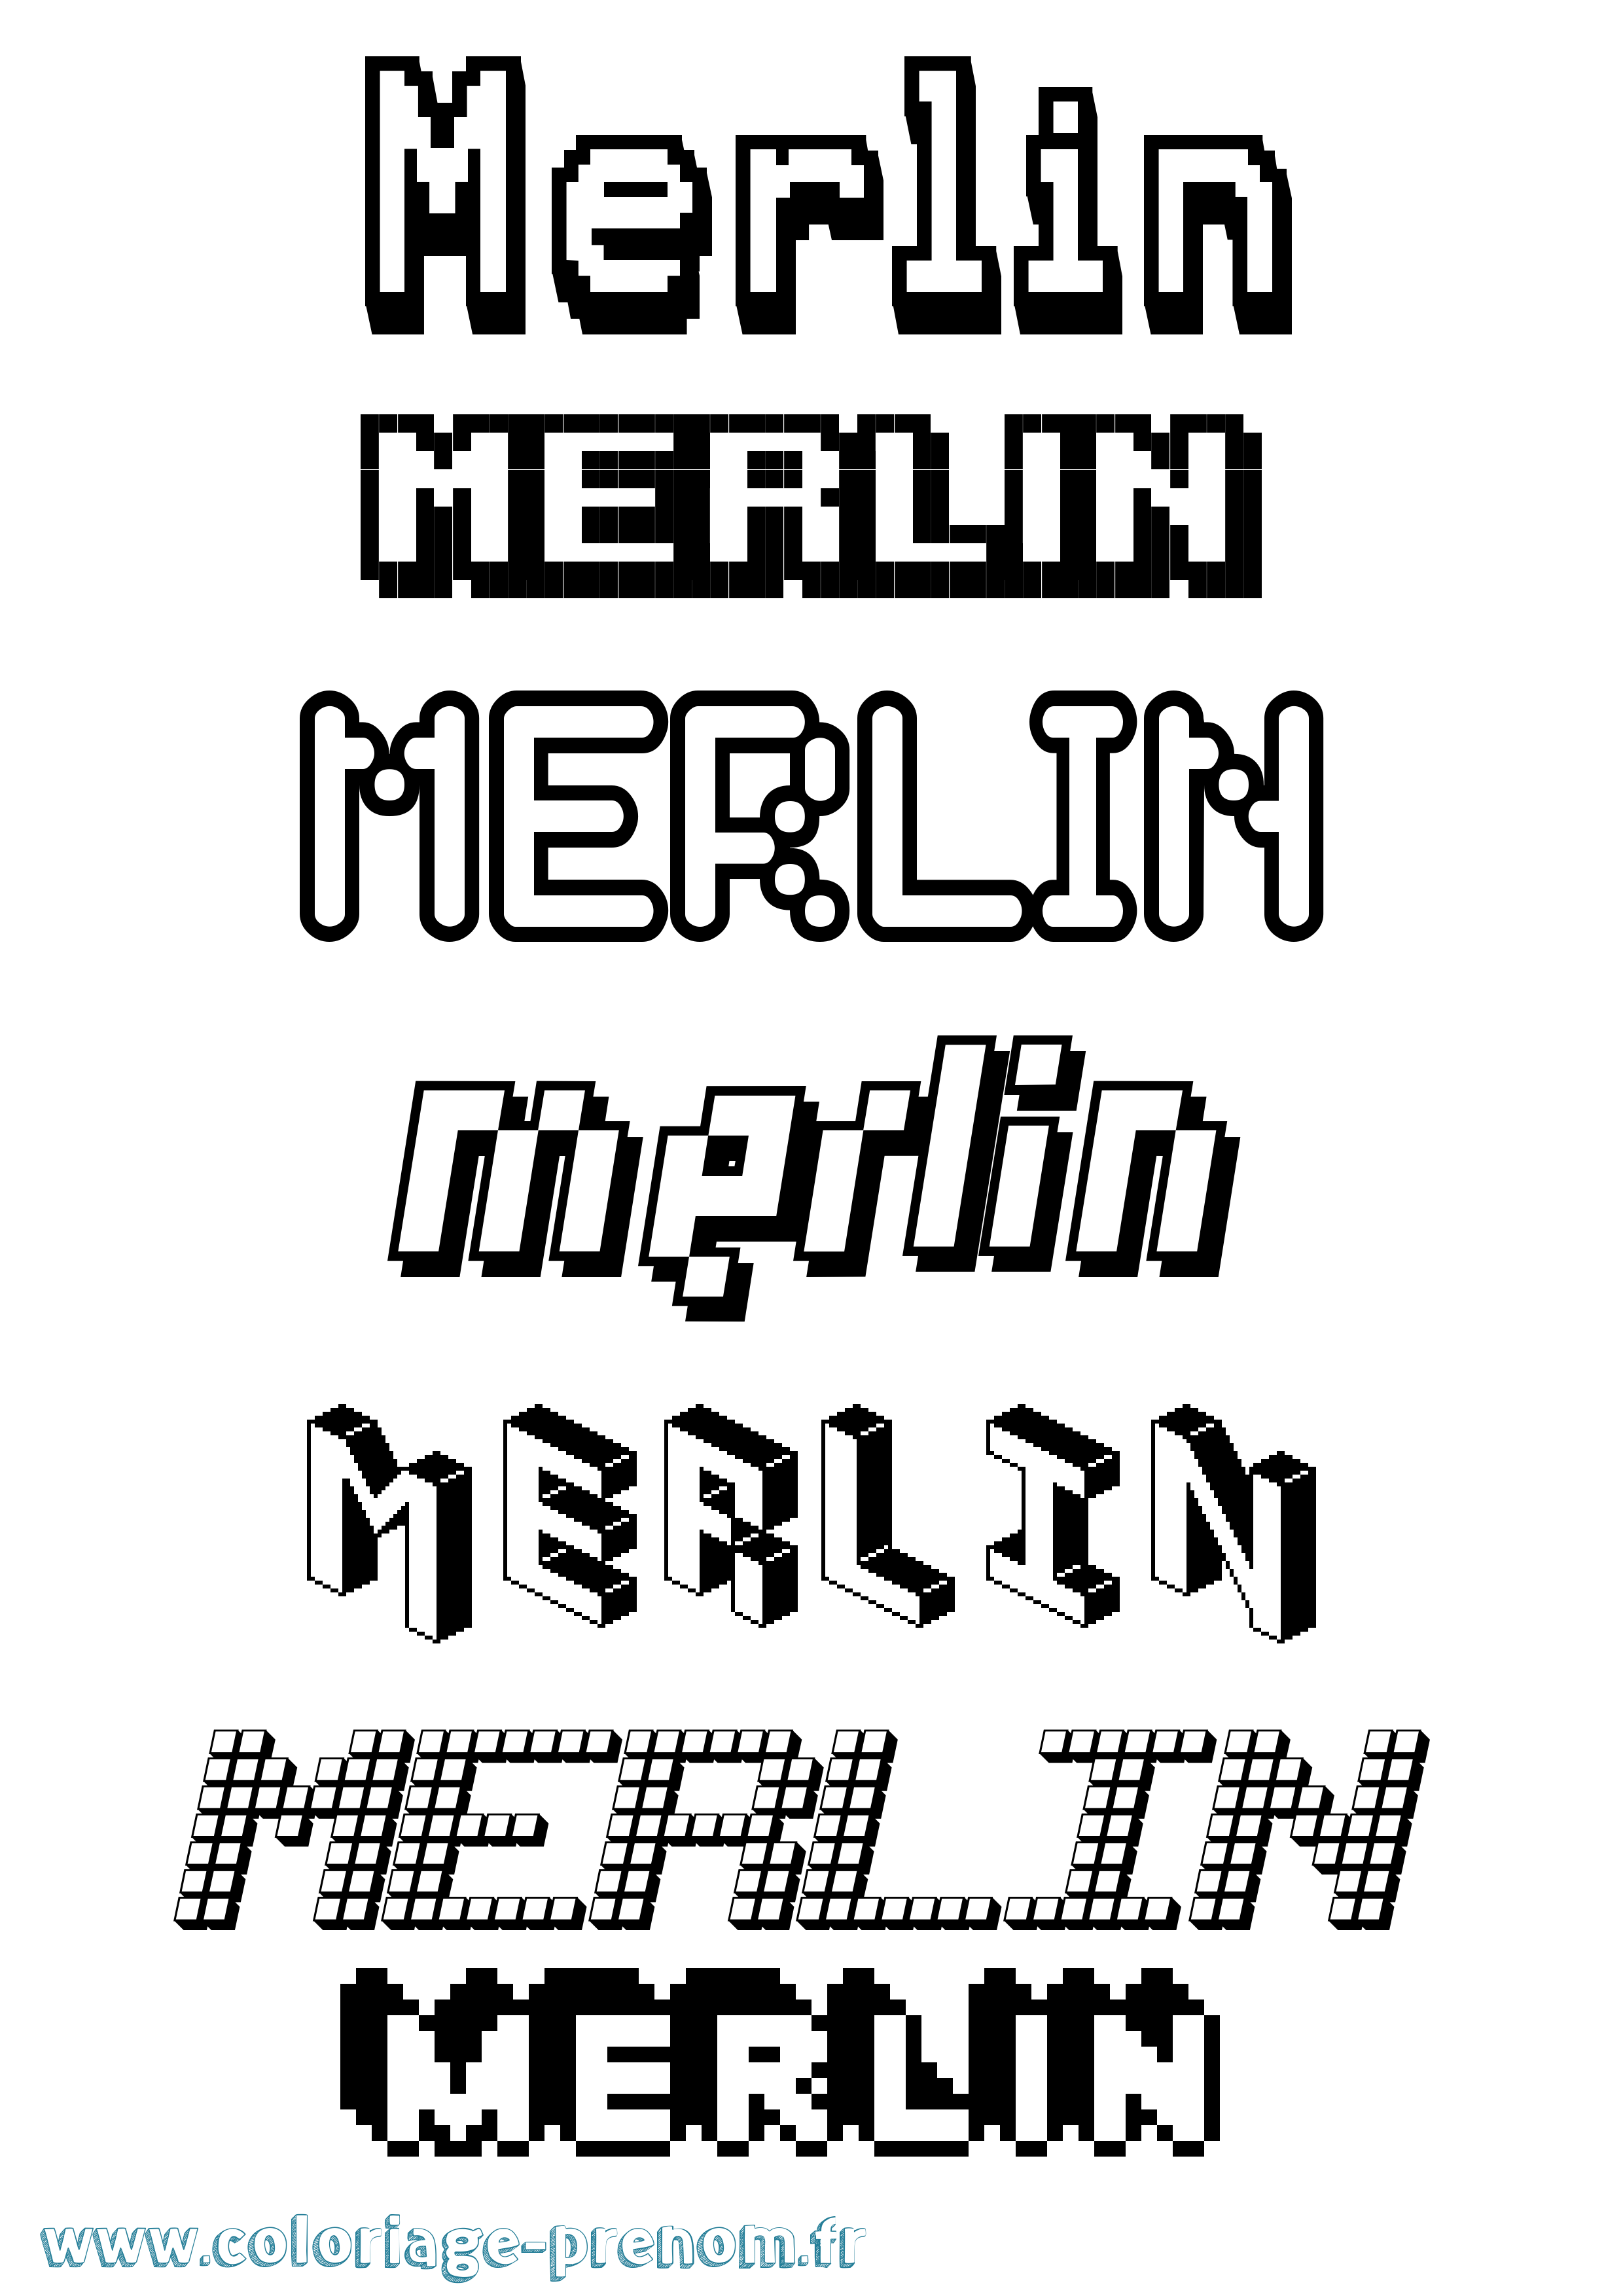 Coloriage prénom Merlin Pixel